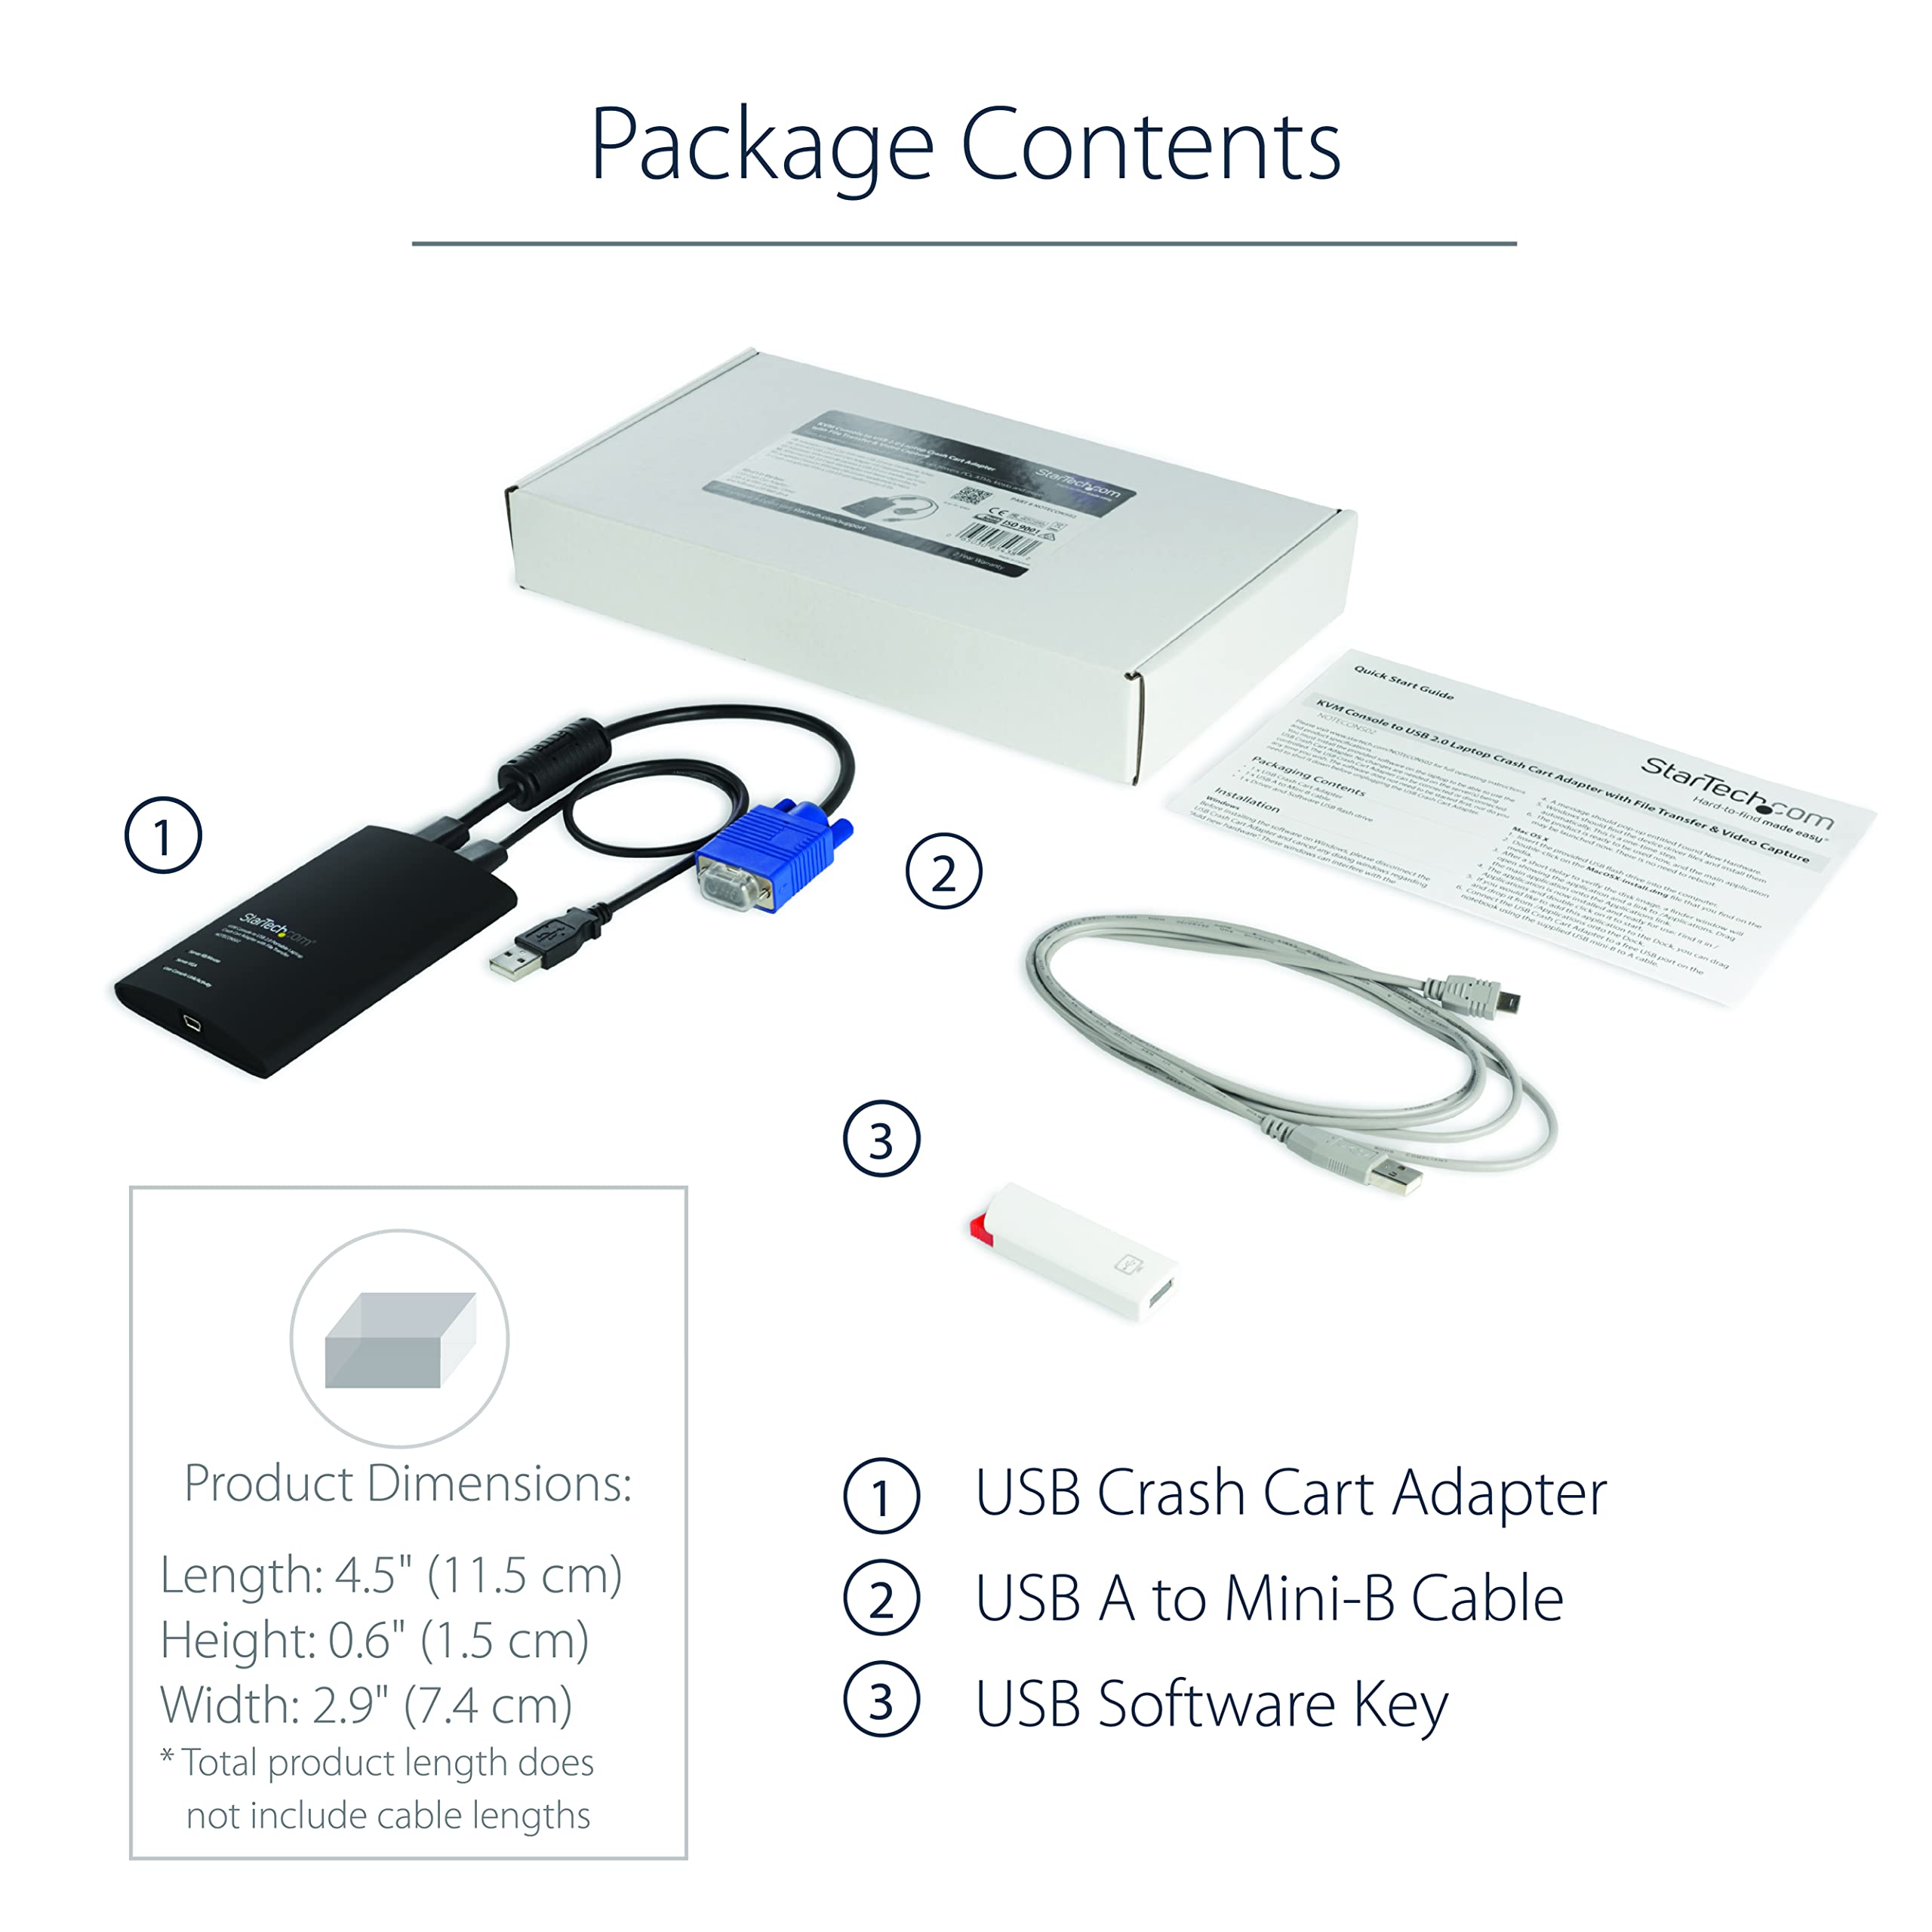 StarTech.com USB Crash Cart Adapter - File Transfer & Video - Portable Server Room Laptop to KVM Console Crash Cart (NOTECONS02), Black